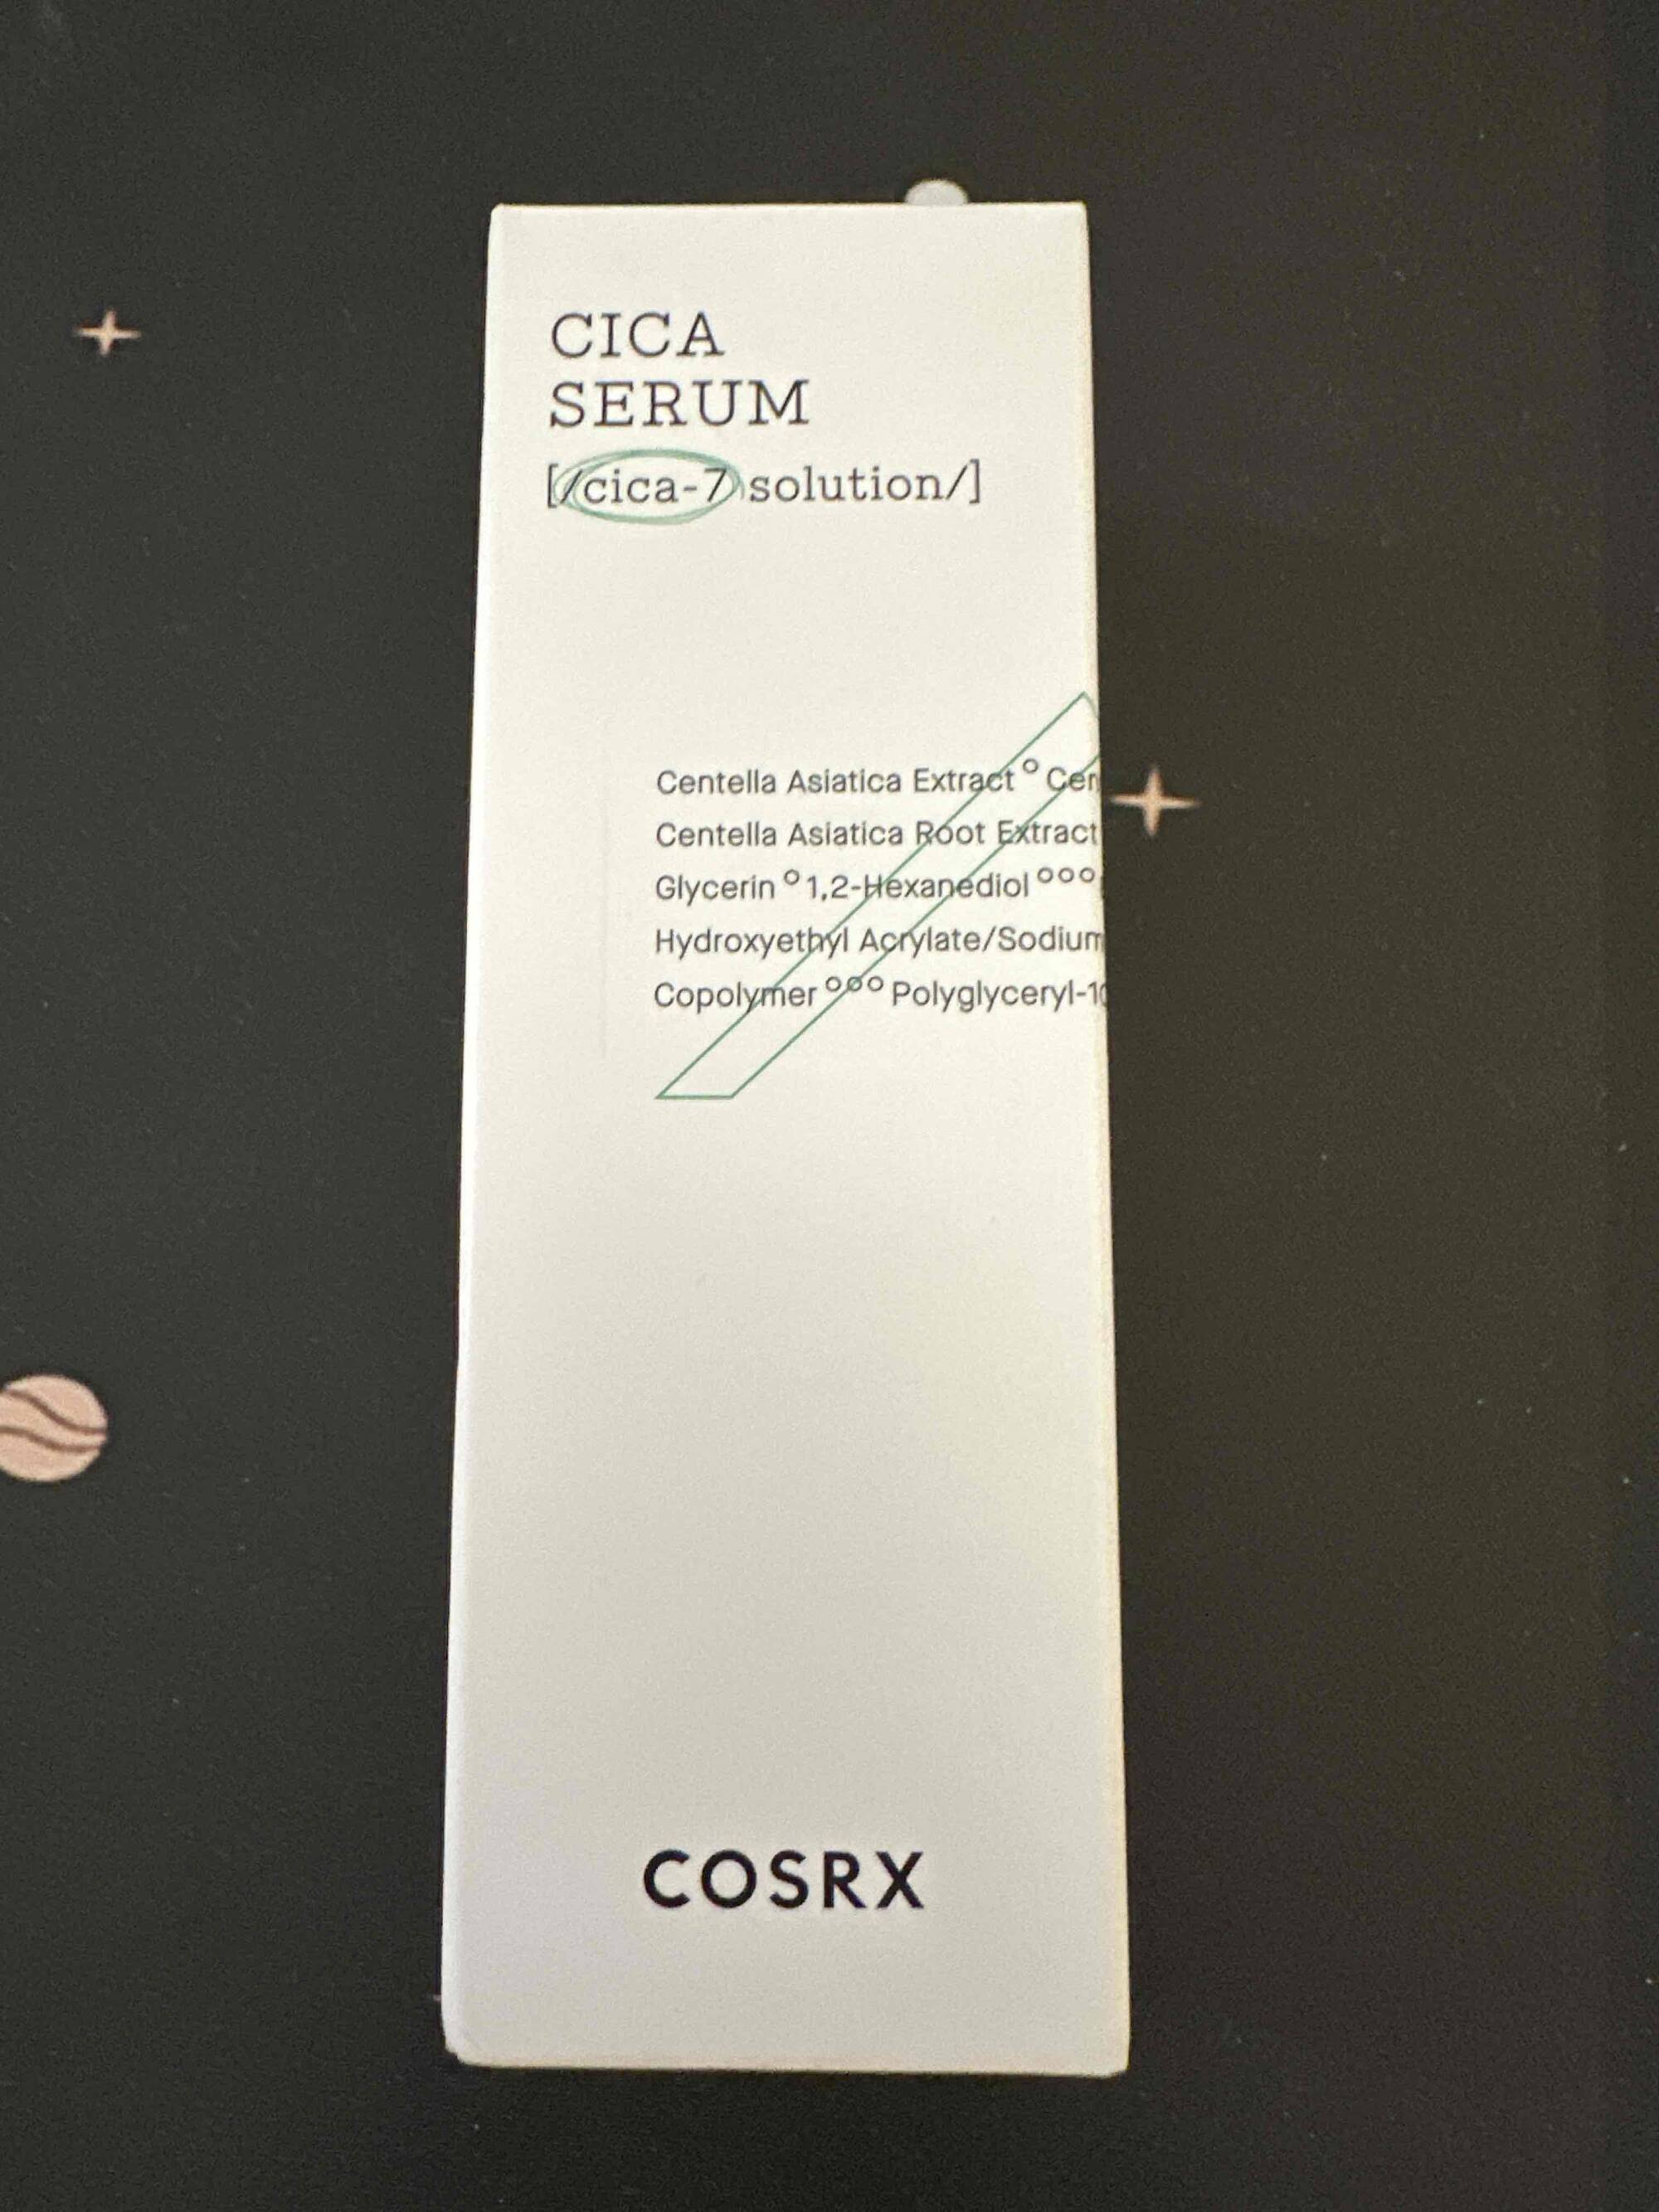 COSRX - Cica serum-7